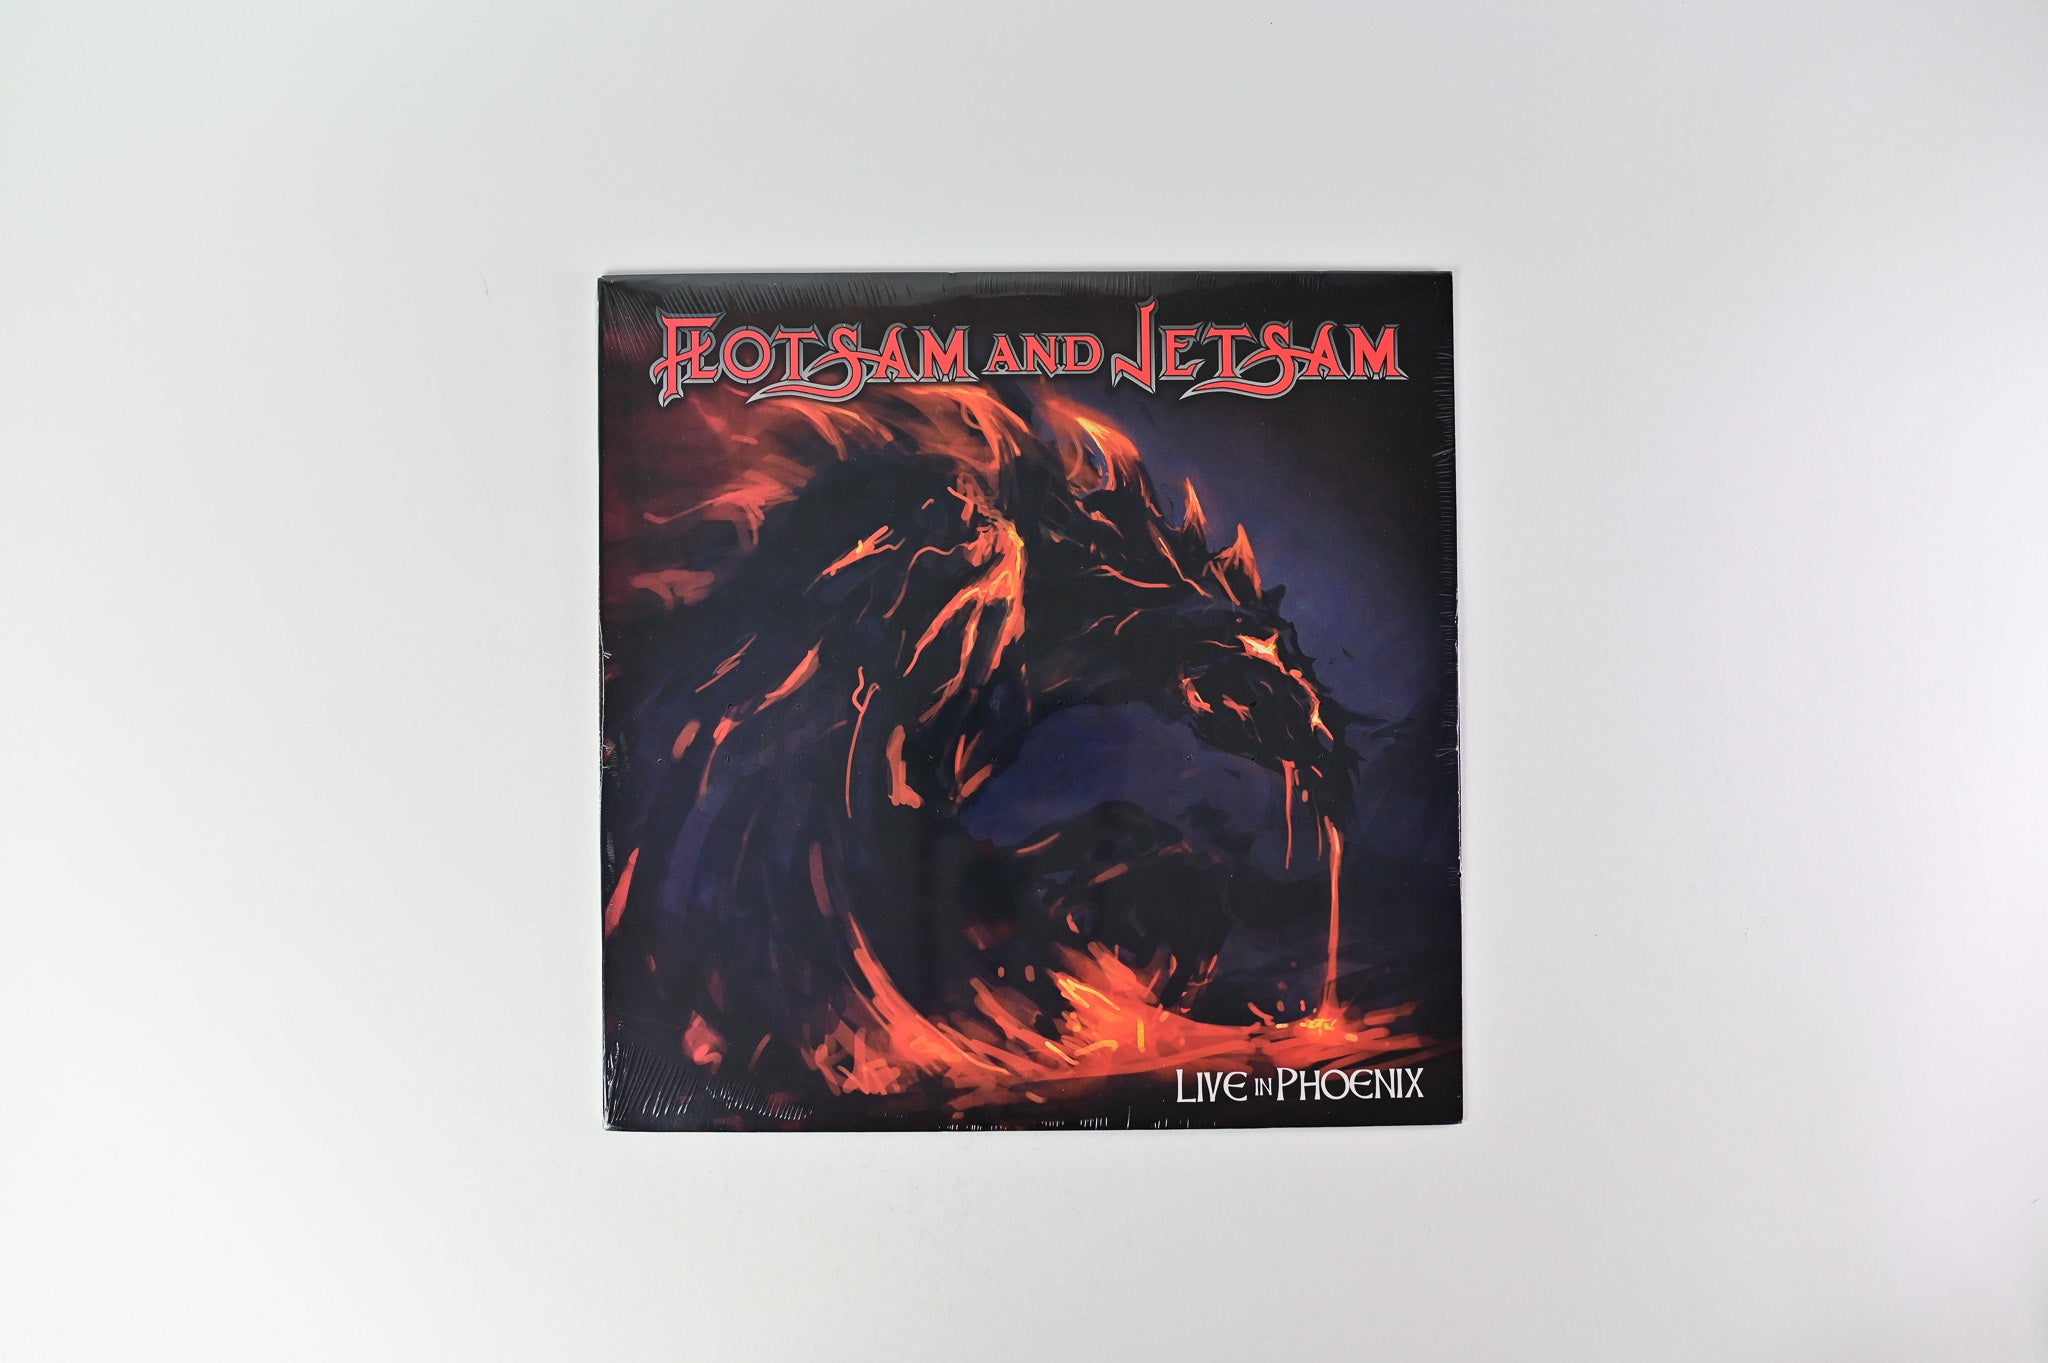 Flotsam And Jetsam - Live In Phoenix on Cleopatra Ltd Red Vinyl Sealed